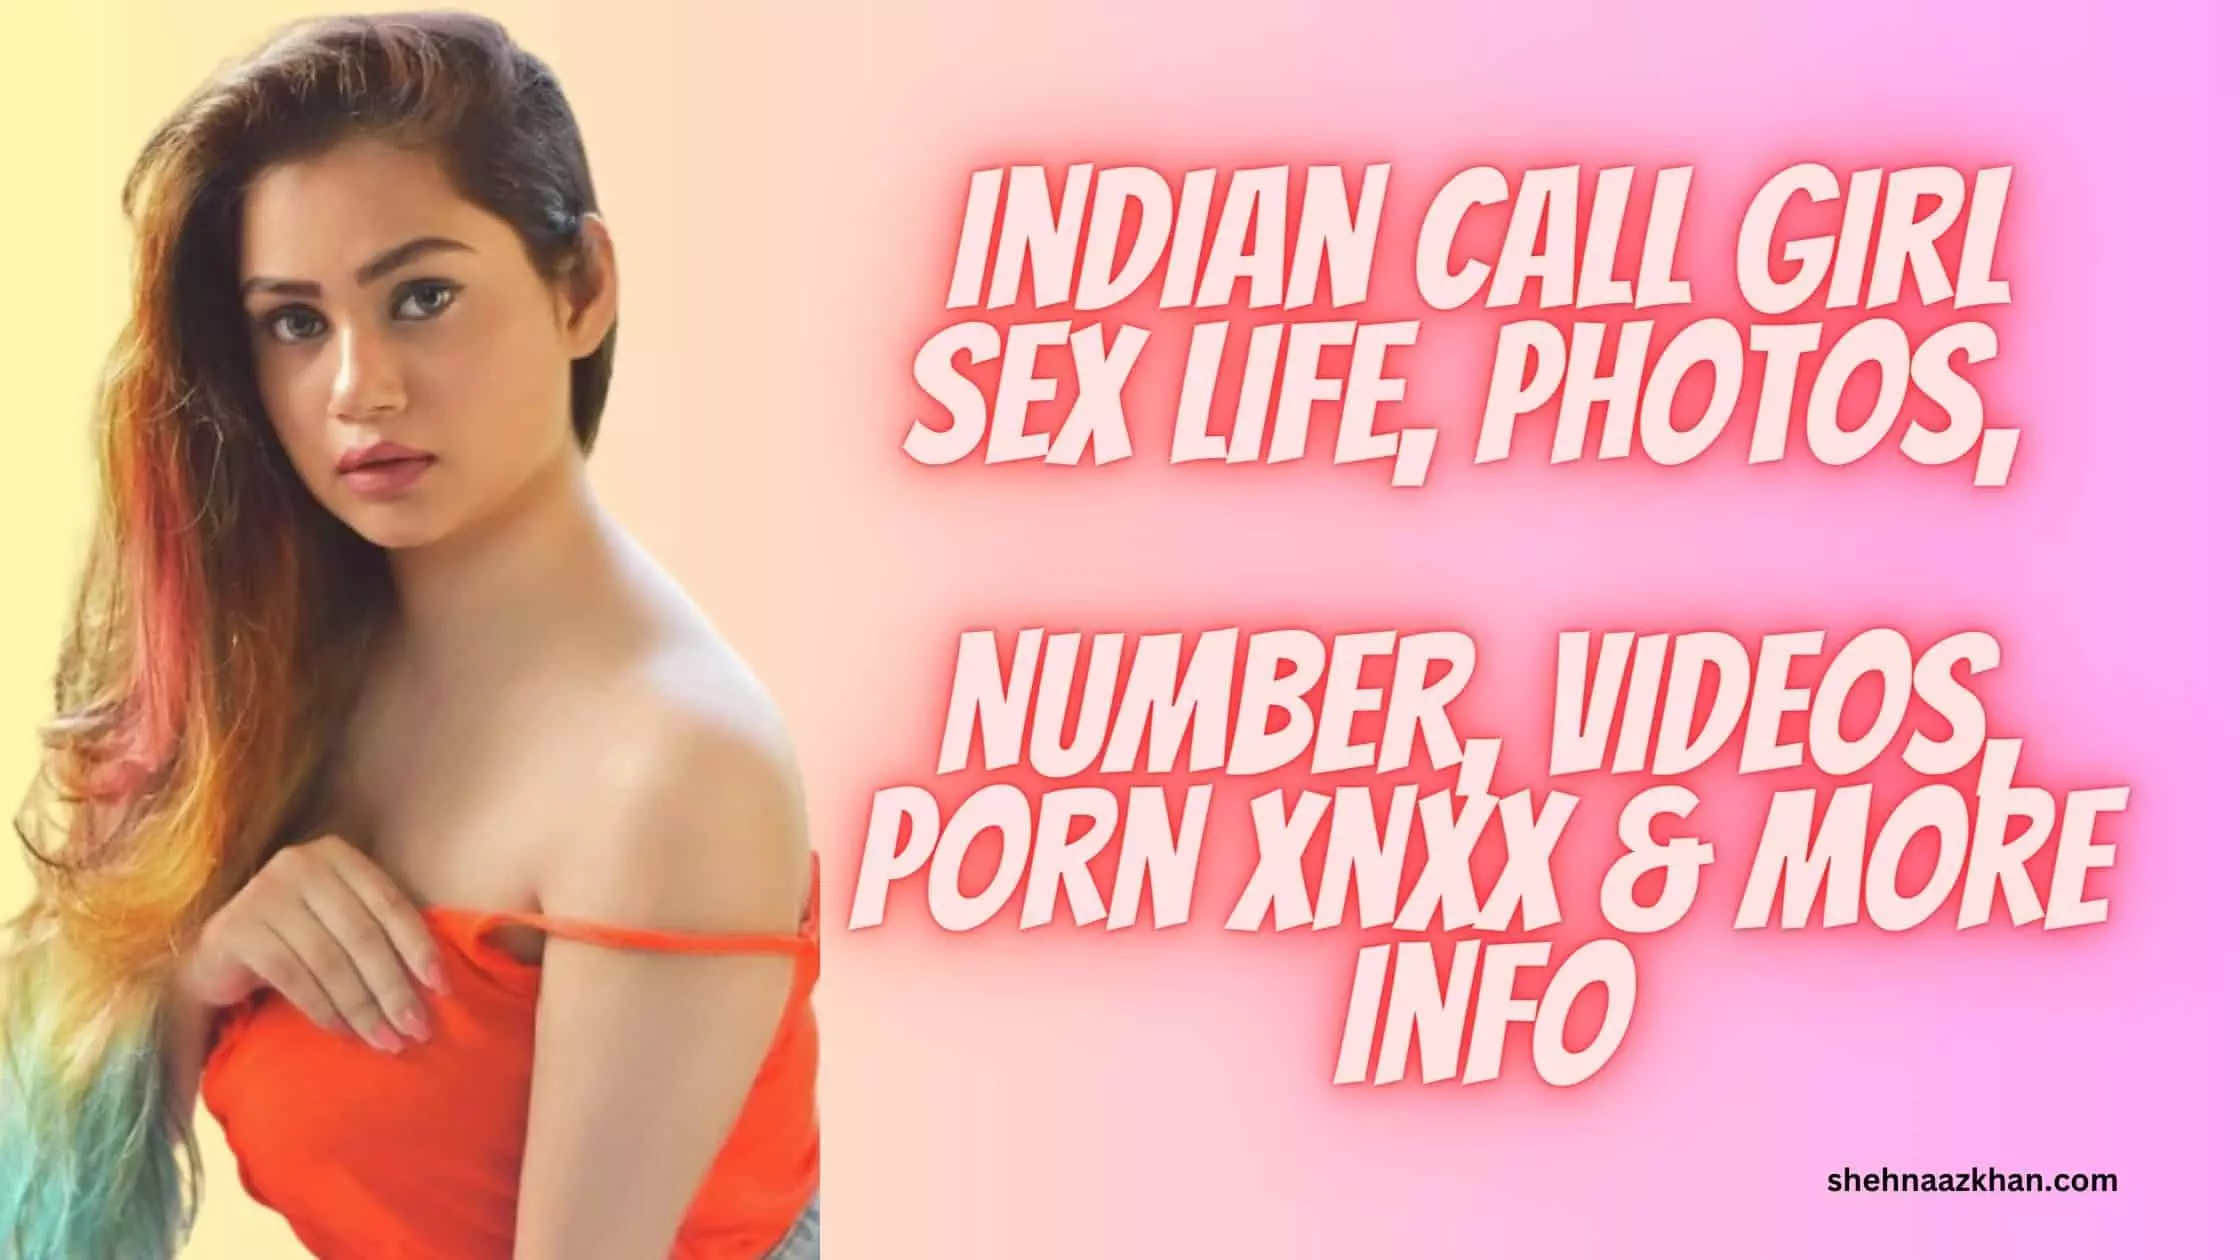 Call Girls Sex Vedios - Indian Call Girl Sex Life, Hot Photos, Number, Porn Videos